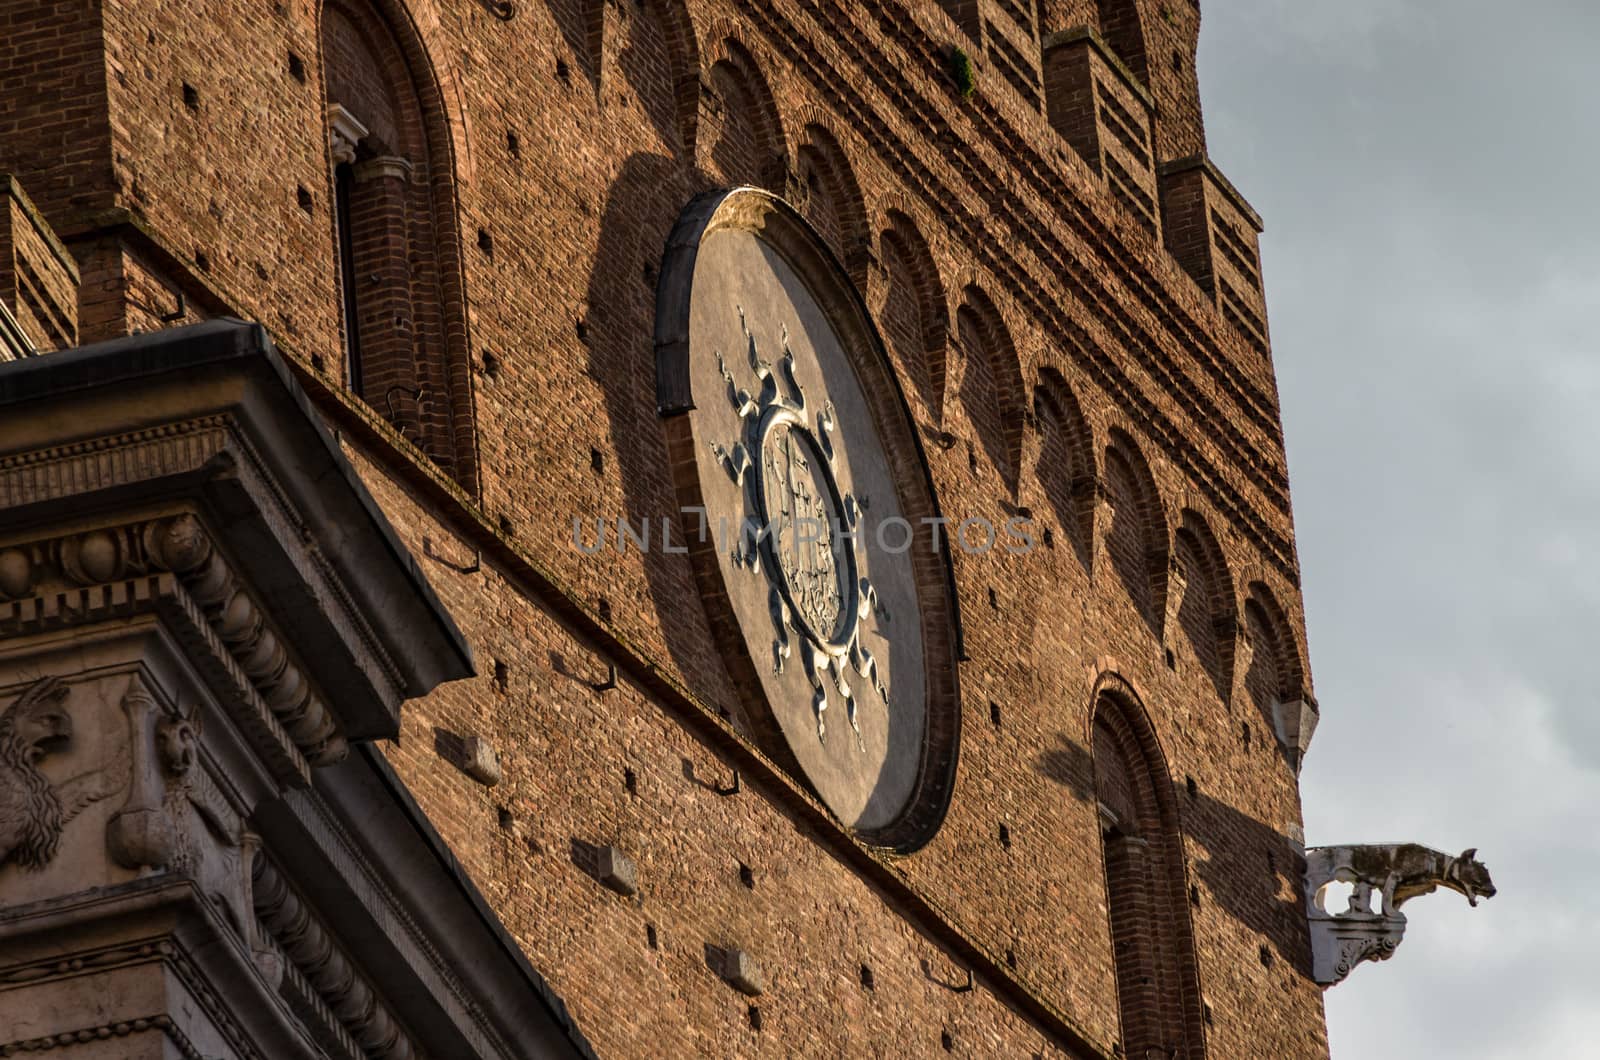 Historical building in Piazza del Campo, Siena